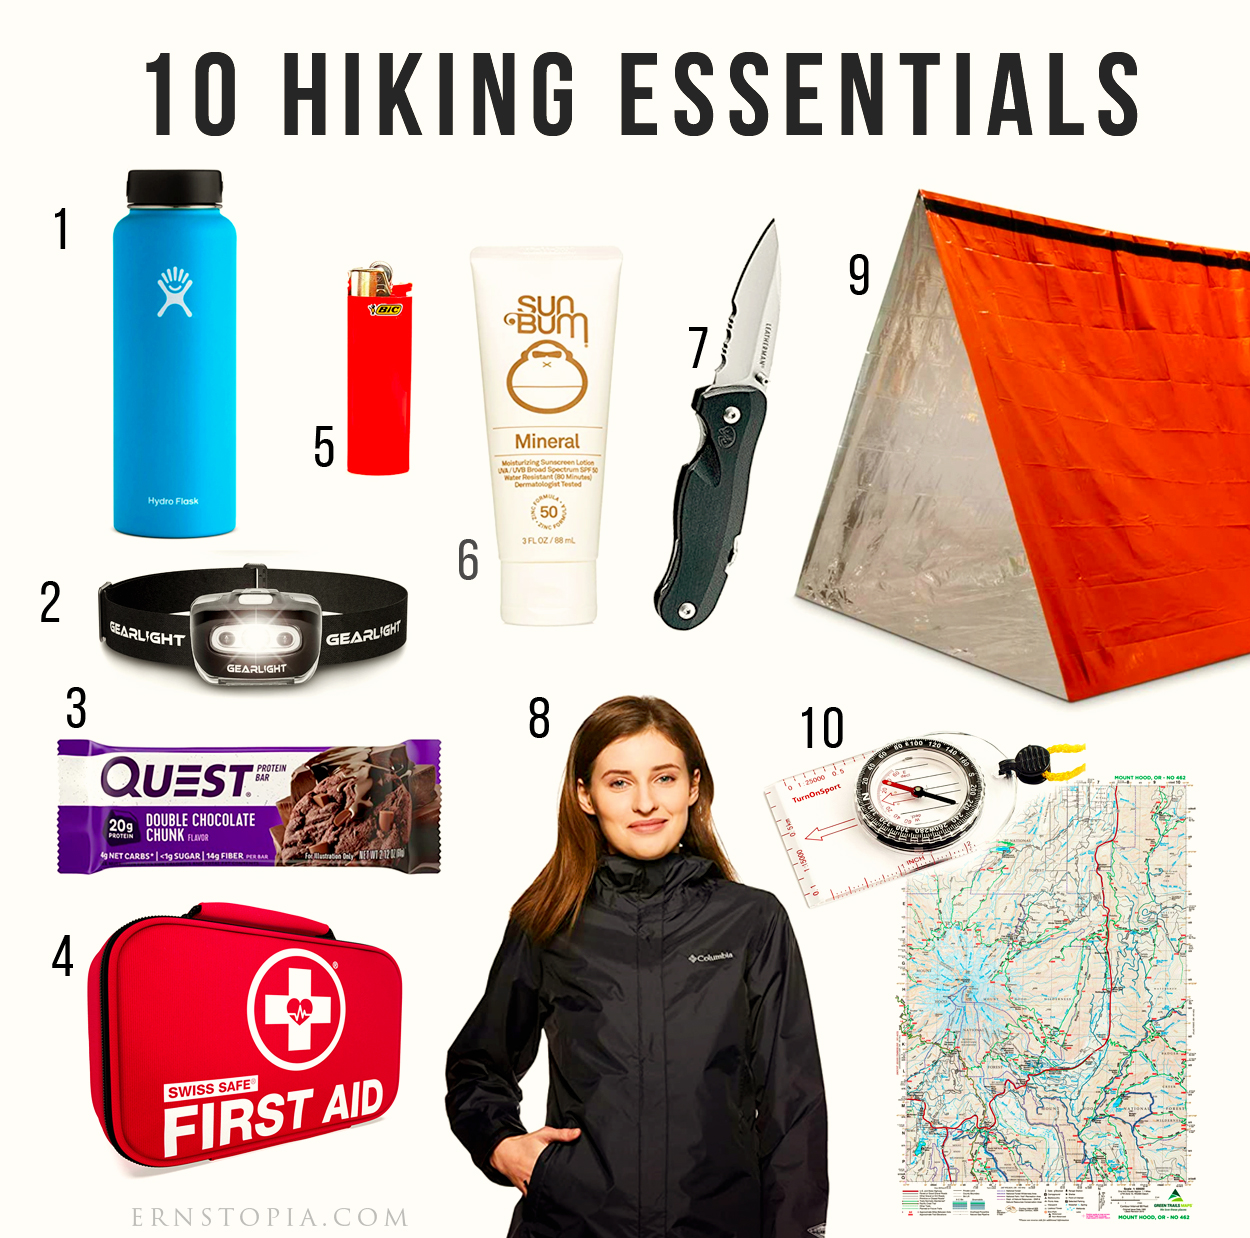 https://www.ernstopia.com/wp-content/uploads/2020/08/10-hiking-essentials.jpg